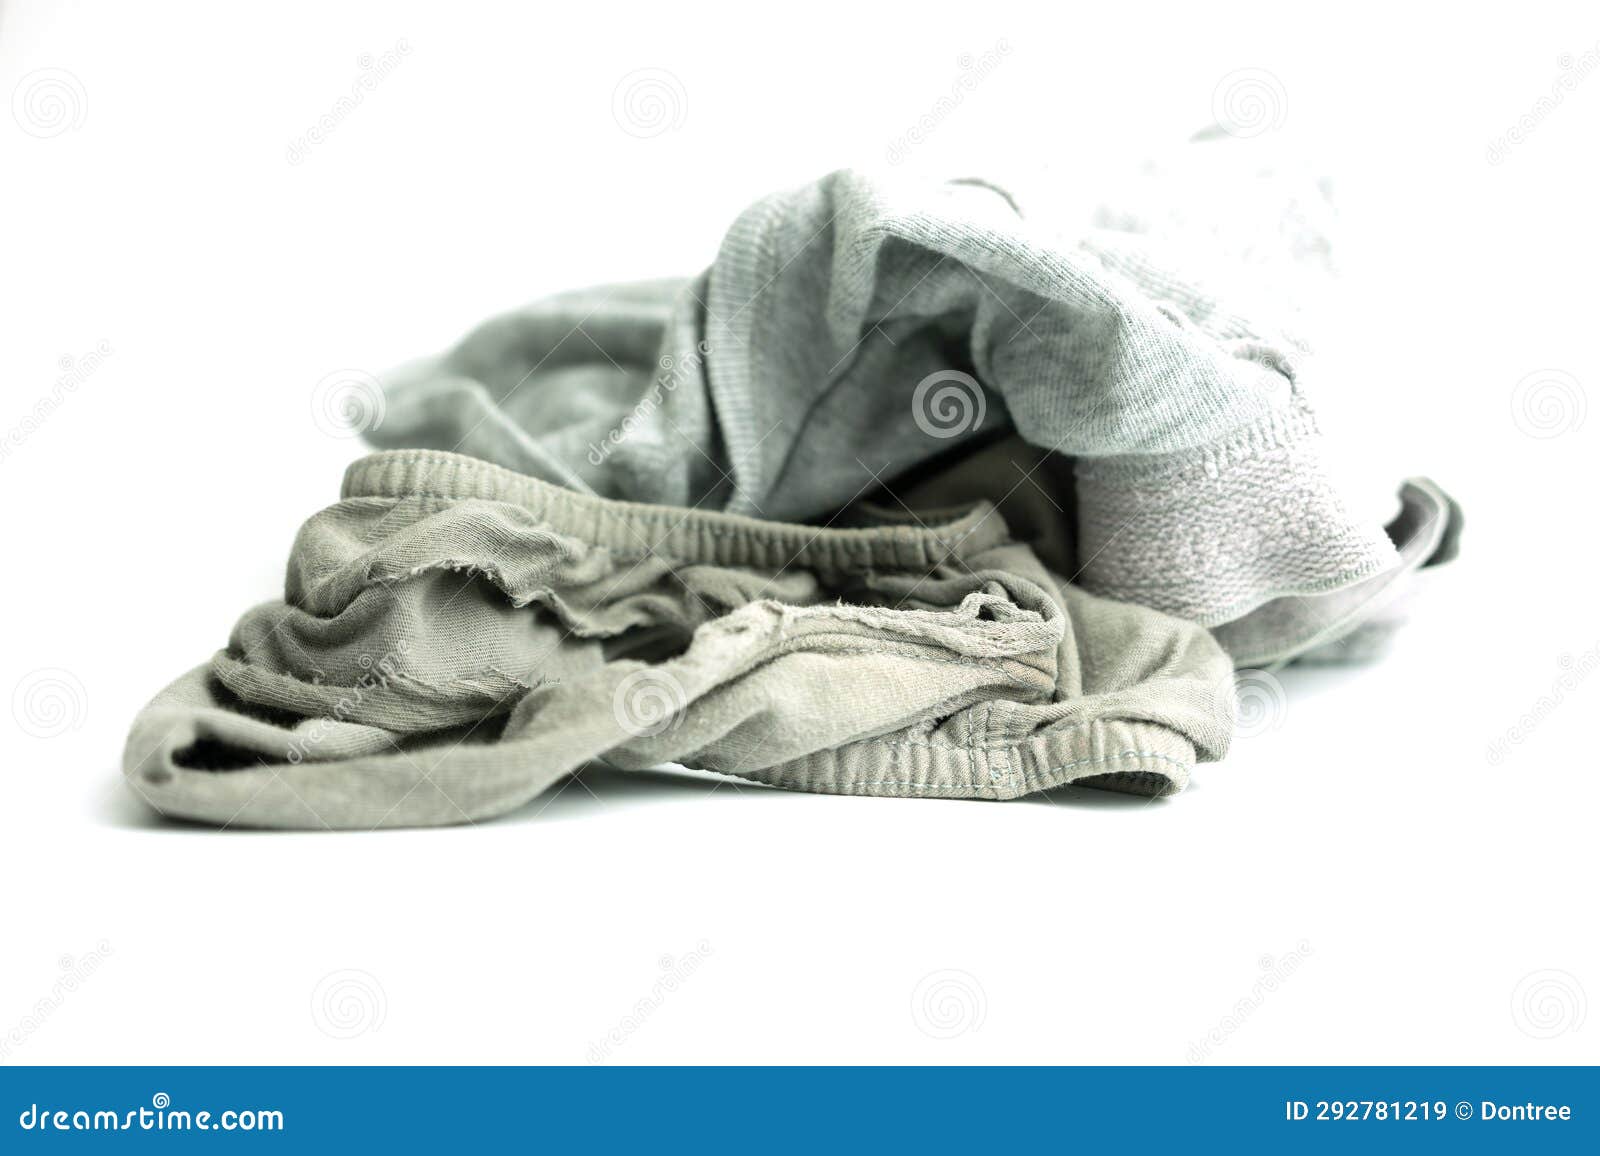 228 Men Dirty Underwear Stock Photos - Free & Royalty-Free Stock